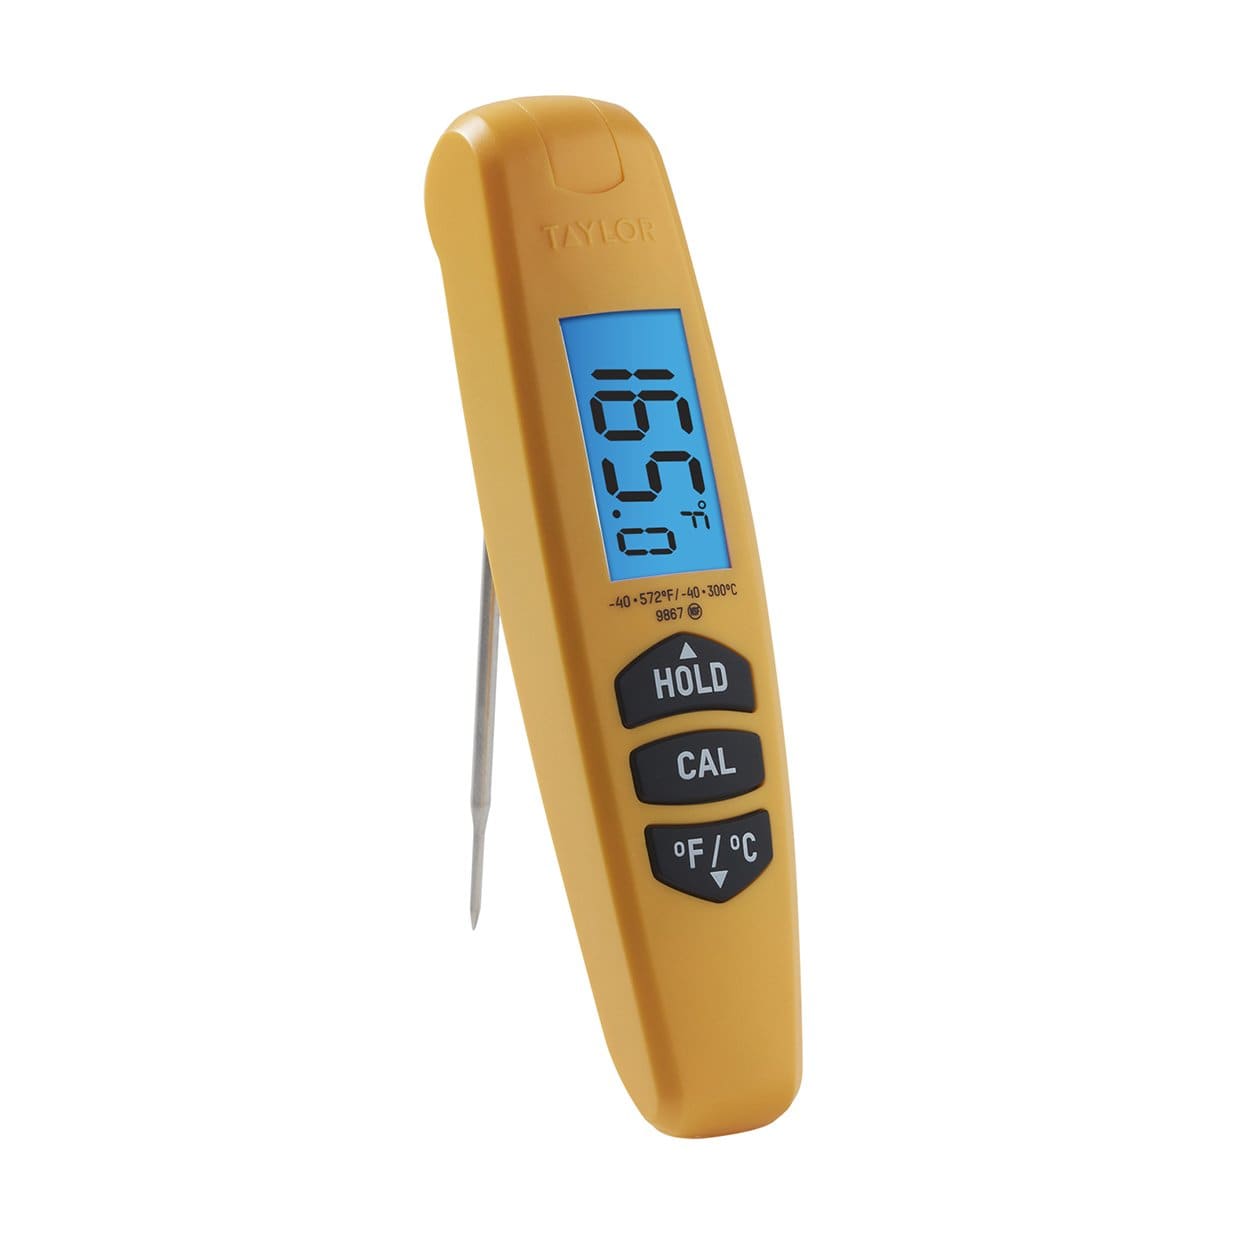 Taylor 1476FDA Digital Thermometer, Folding Probe